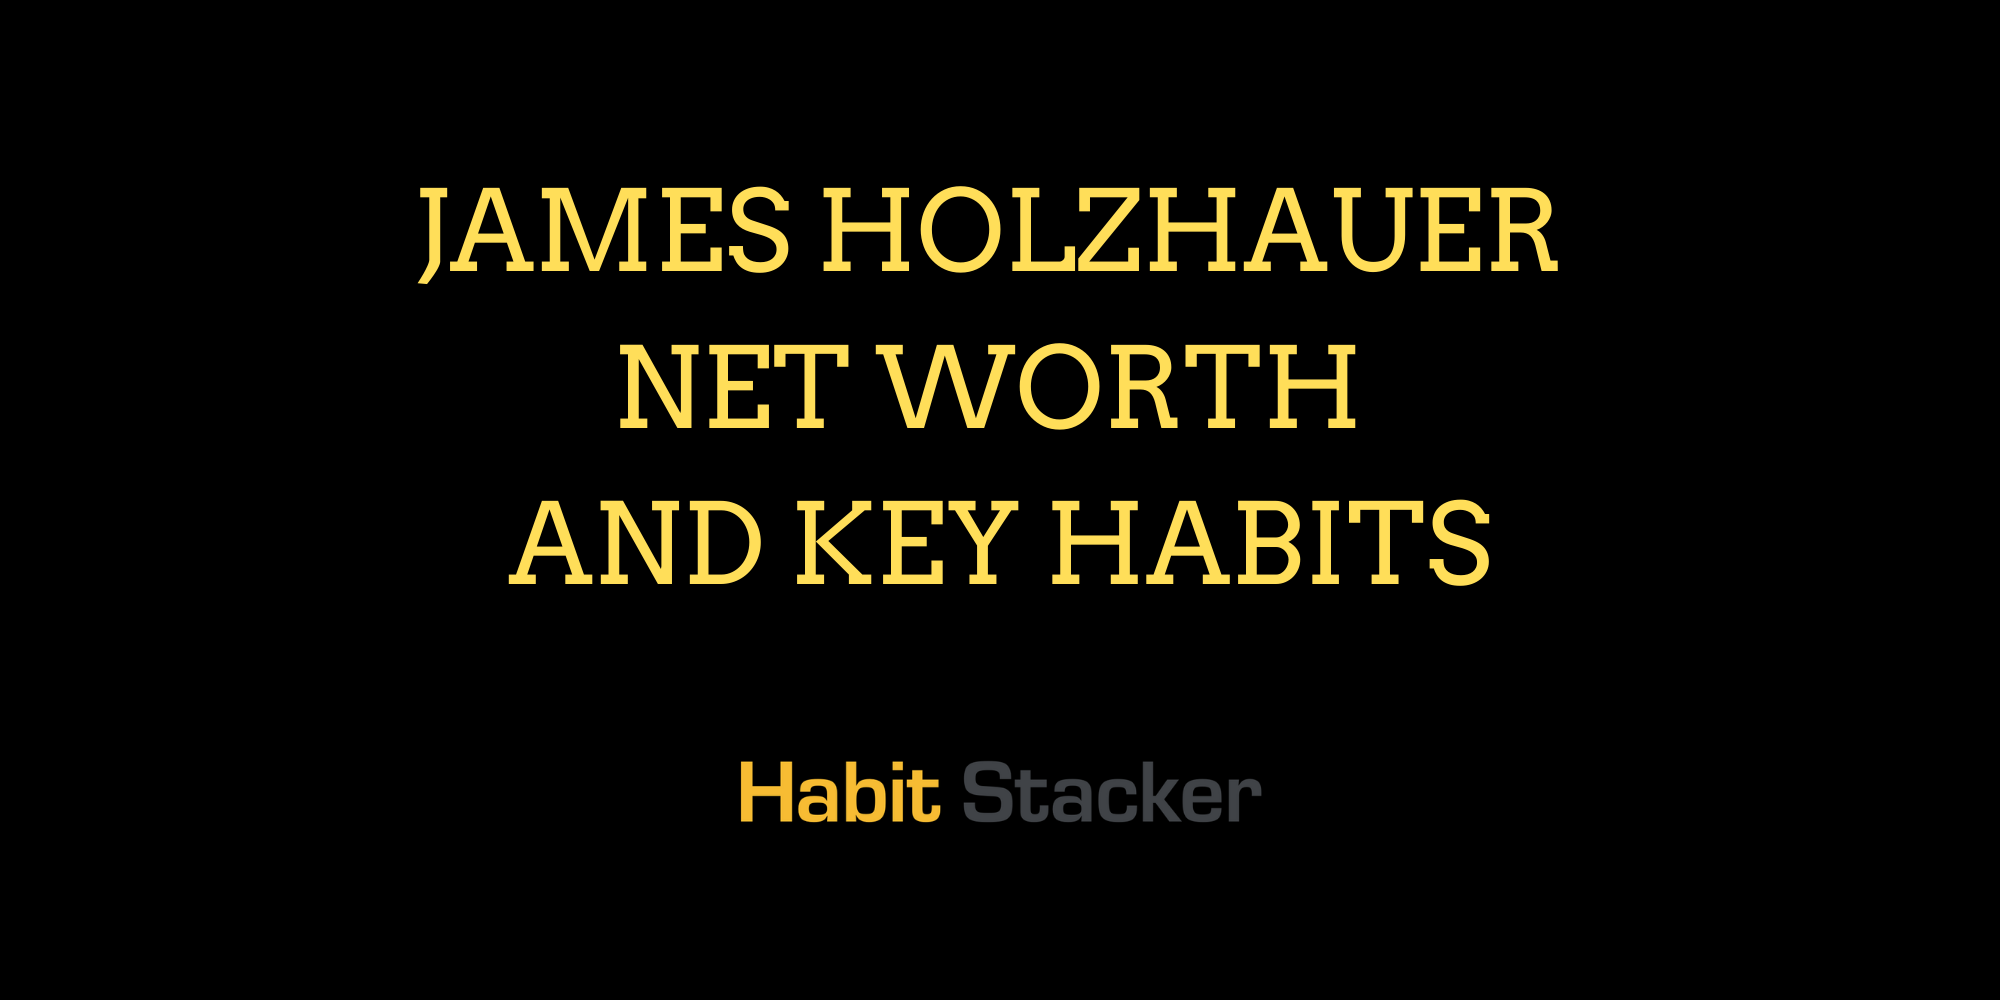 James Holzhauer Net Worth and Key Habits